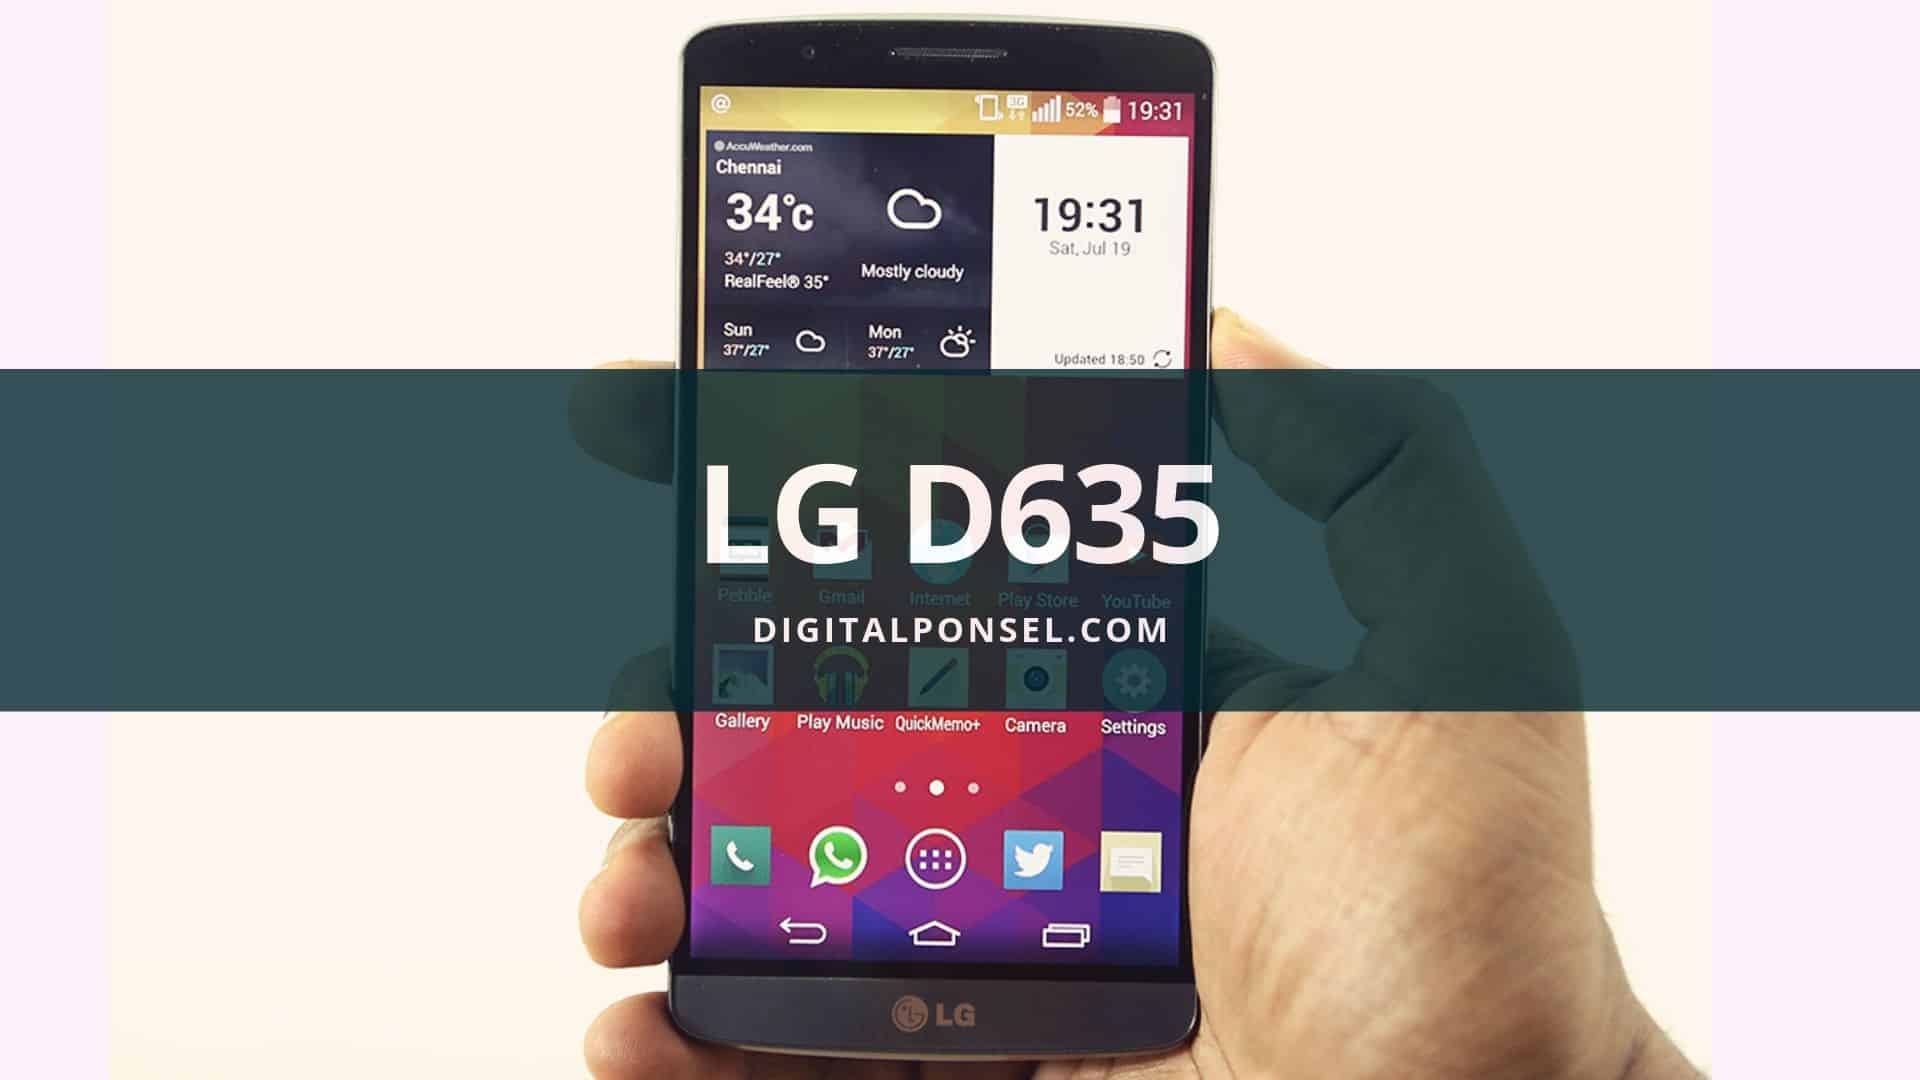 LG D635